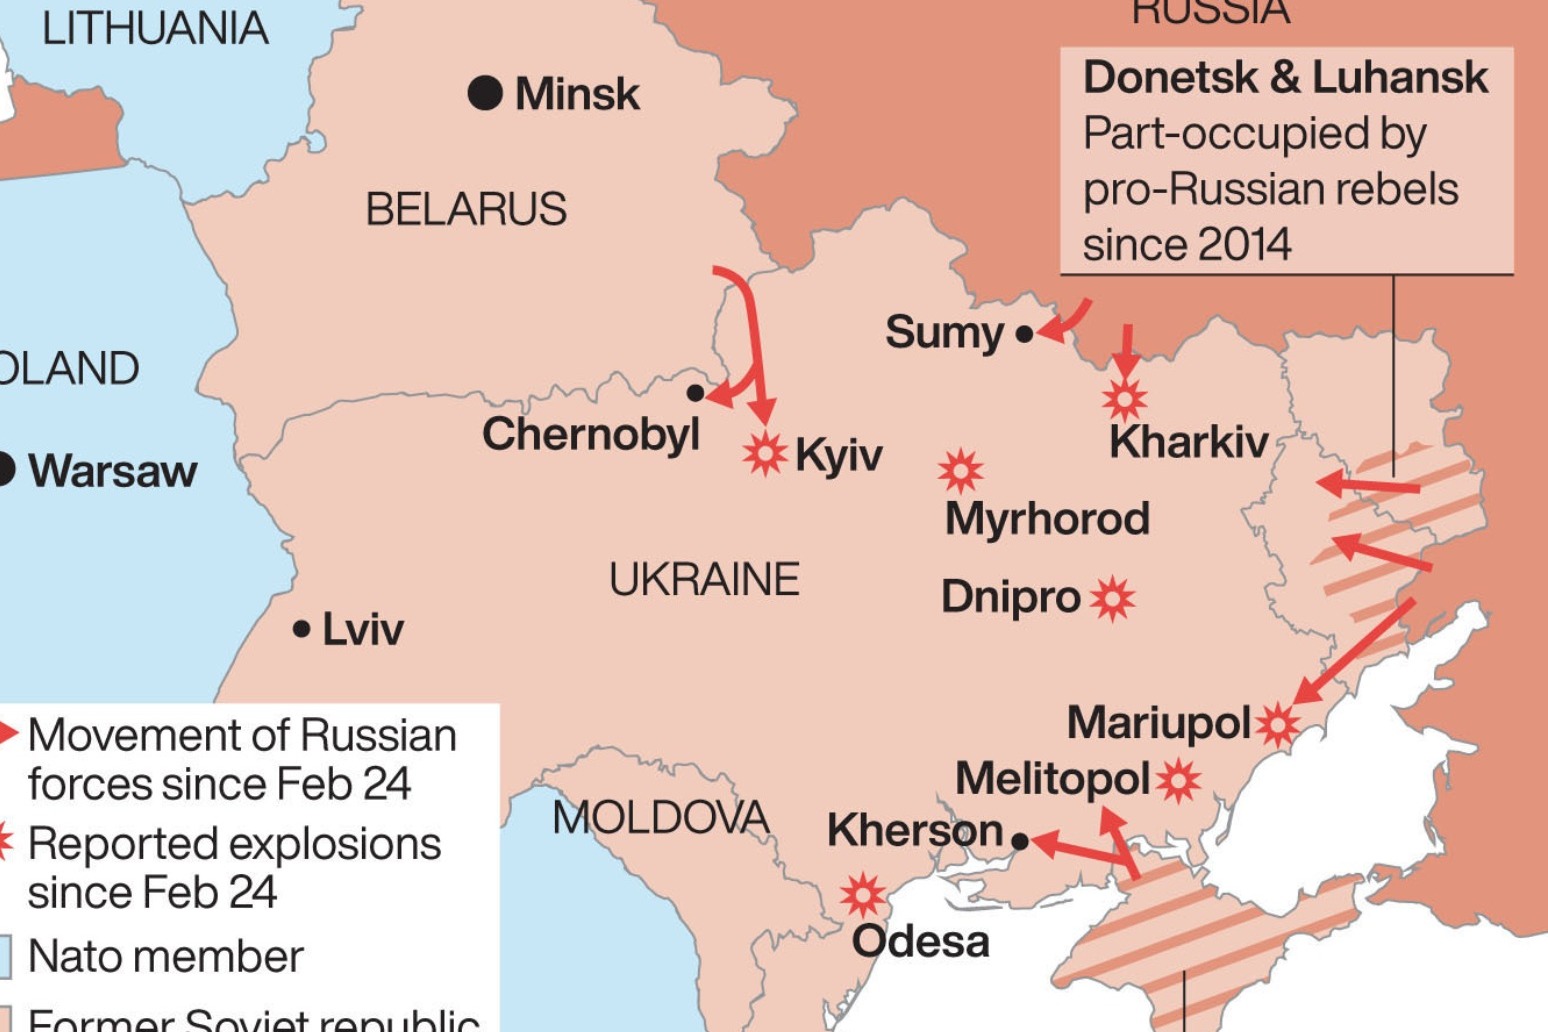 West’s sanctions misaligned with urgency of Ukraine crisis, expert warns 